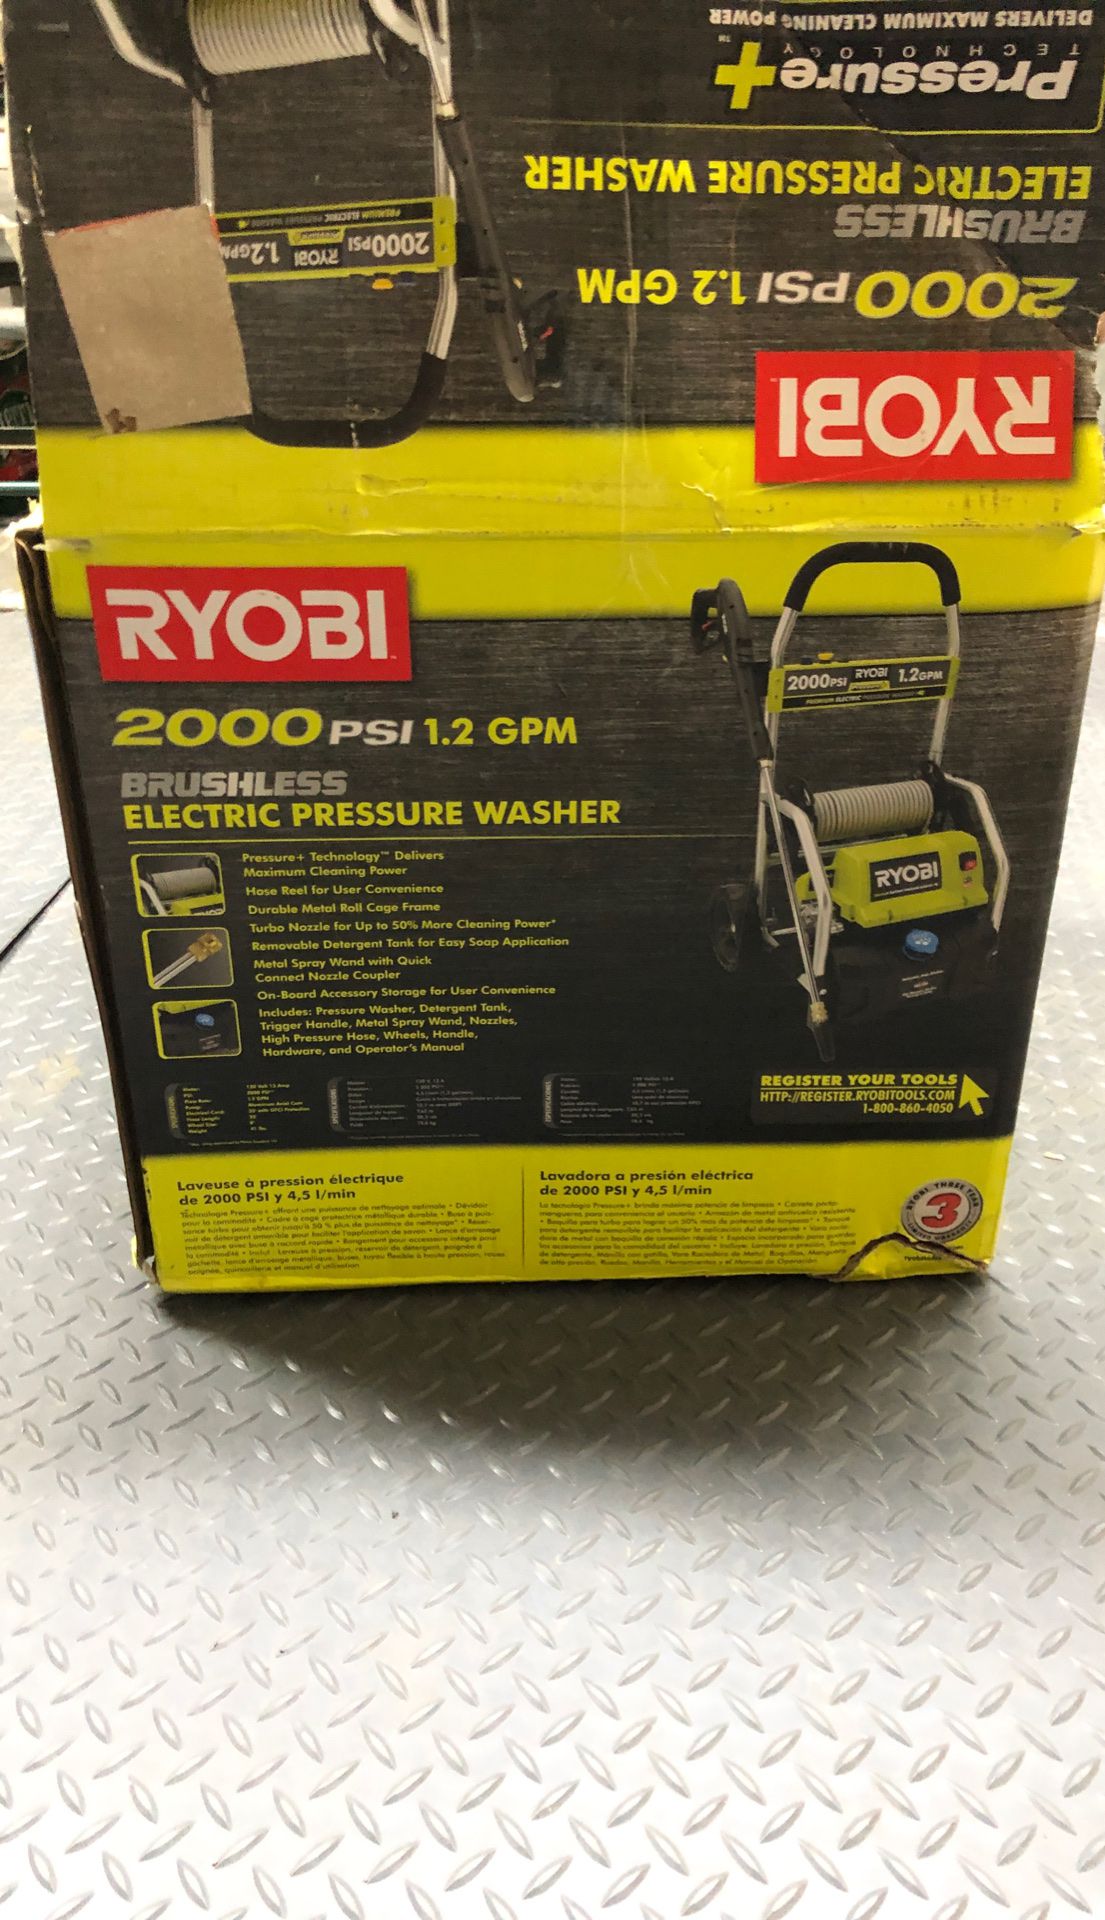 Brand new in the box Ryobi 2000 PSI 1.2 GPA electric pressure washer